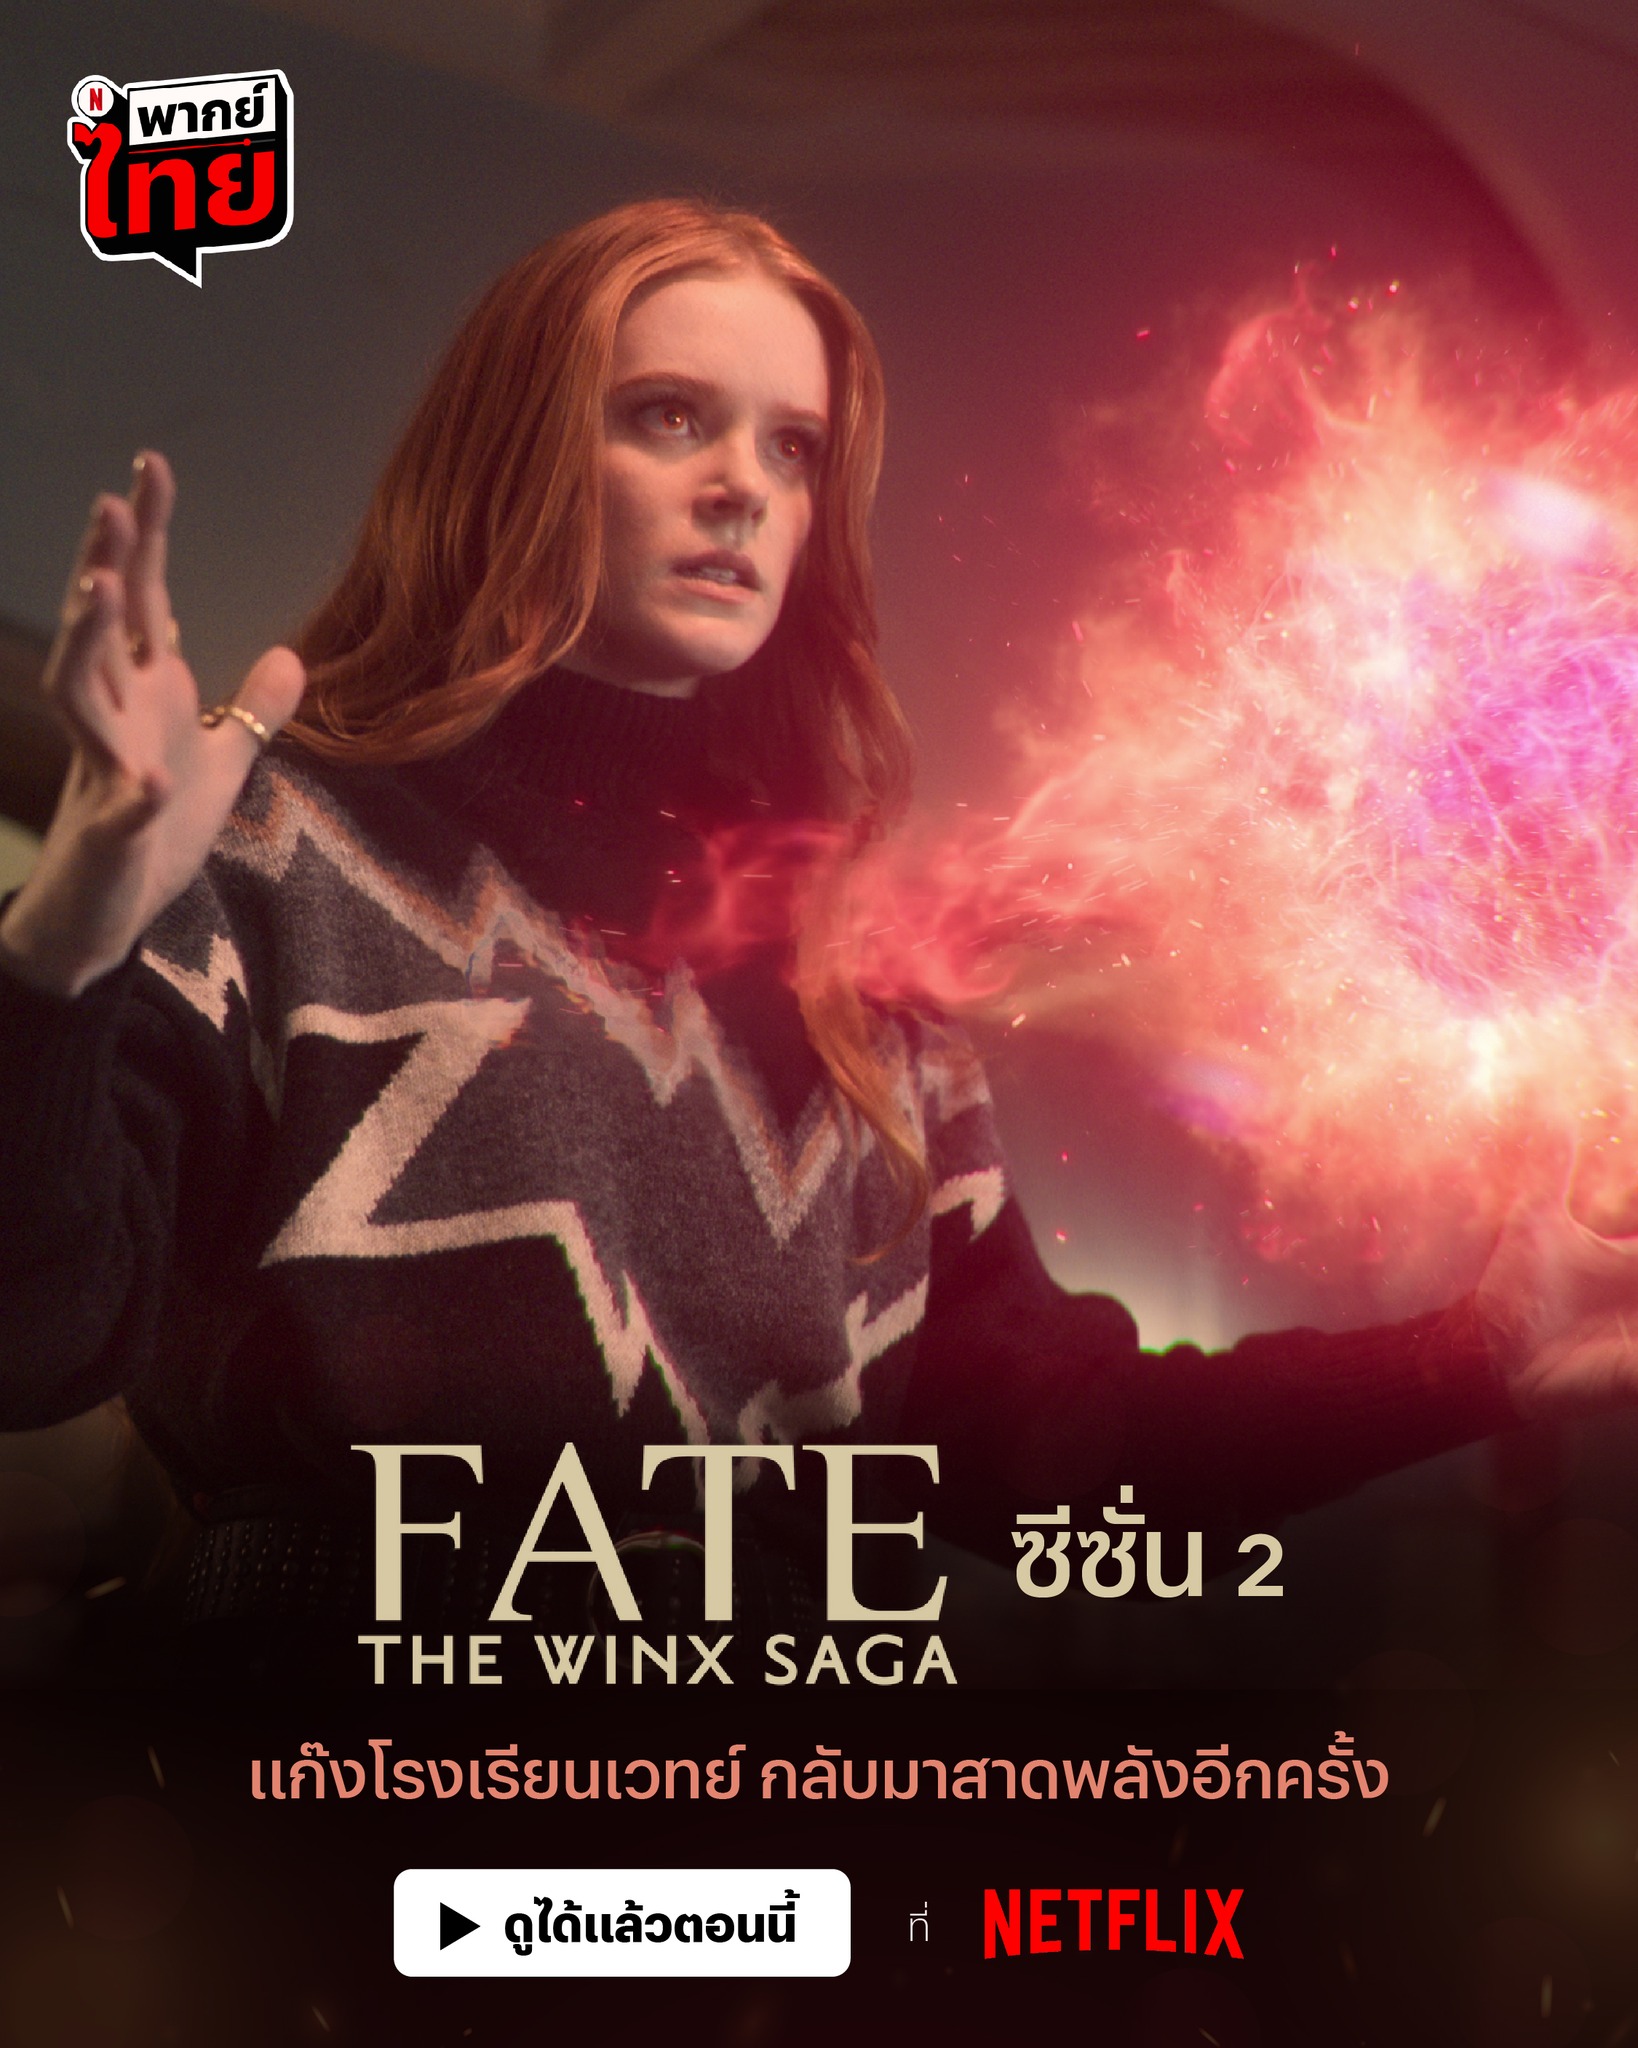 Fate The Winx Saga ซีซั่น 2 พากย์ไทย